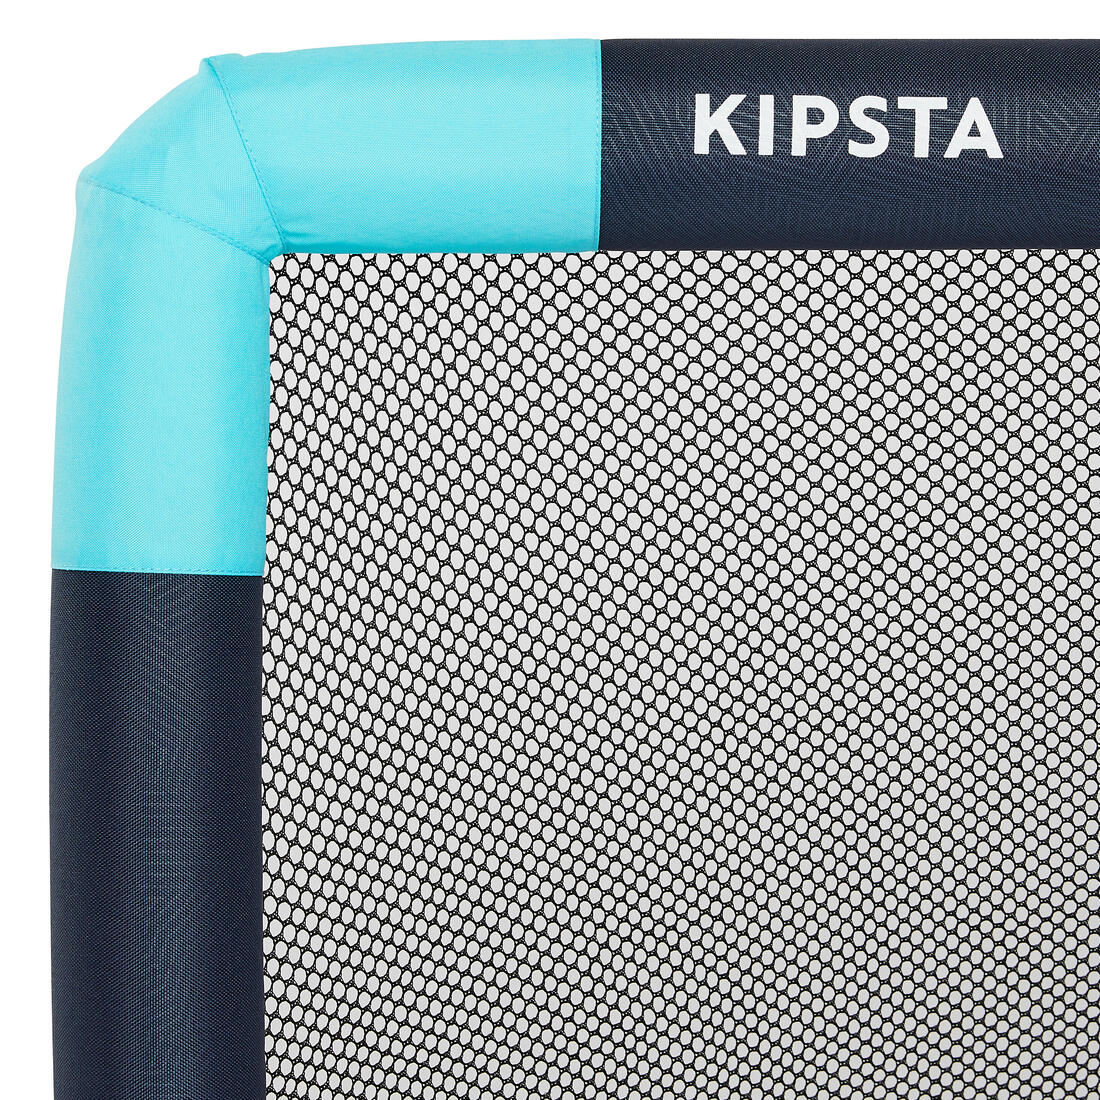 KIPSTA (キプスタ) サッカー ゴールケージ 空気注入式 ポンプ付き Air Kage Pump